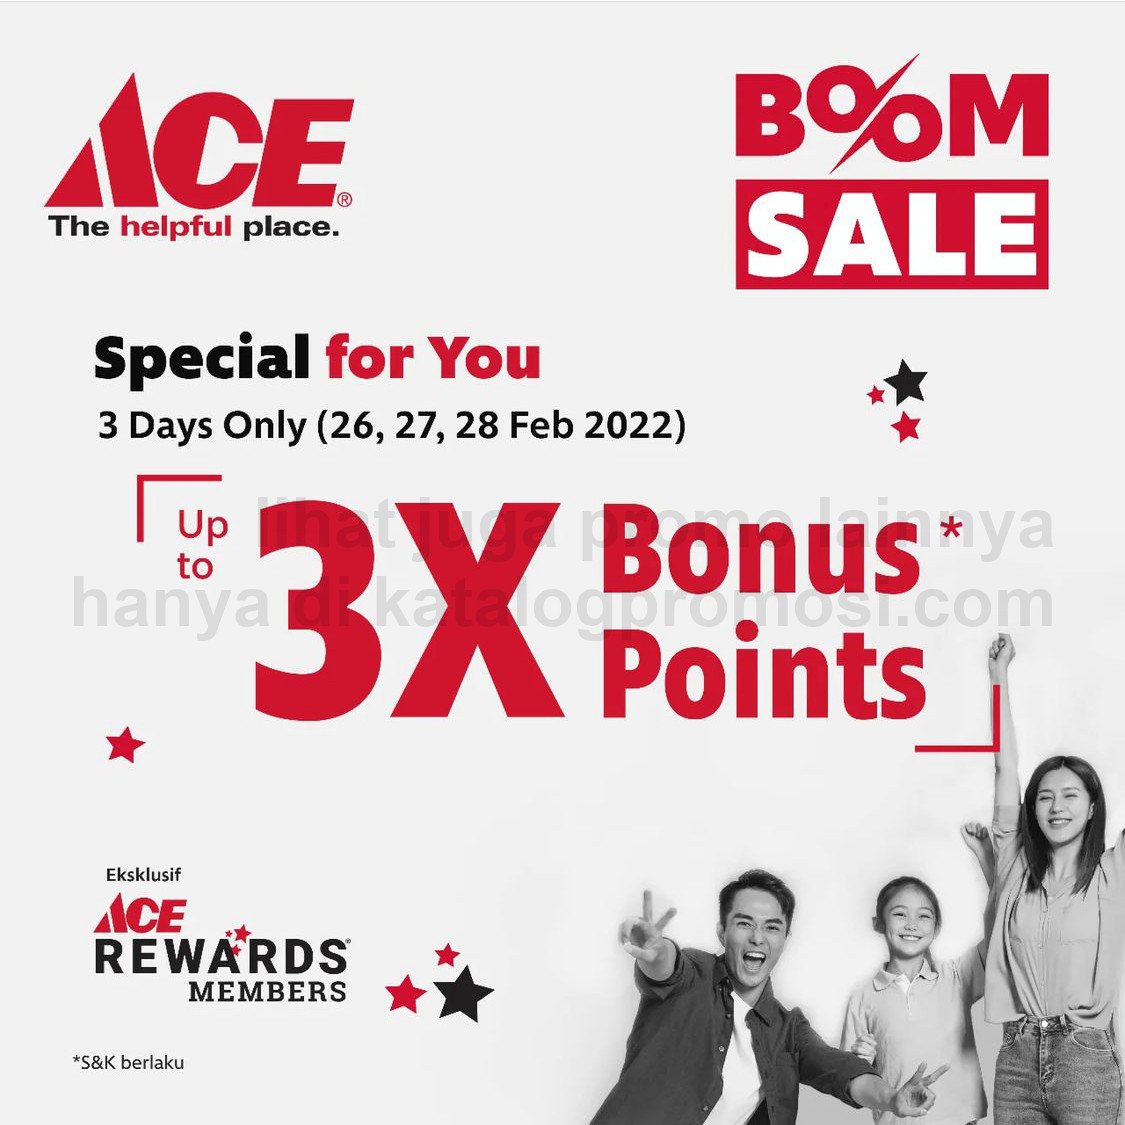 Promo ACE BOOM SALE 3 DAY DEALS - Dapatkan hingga 3x Bonus Points untuk Member